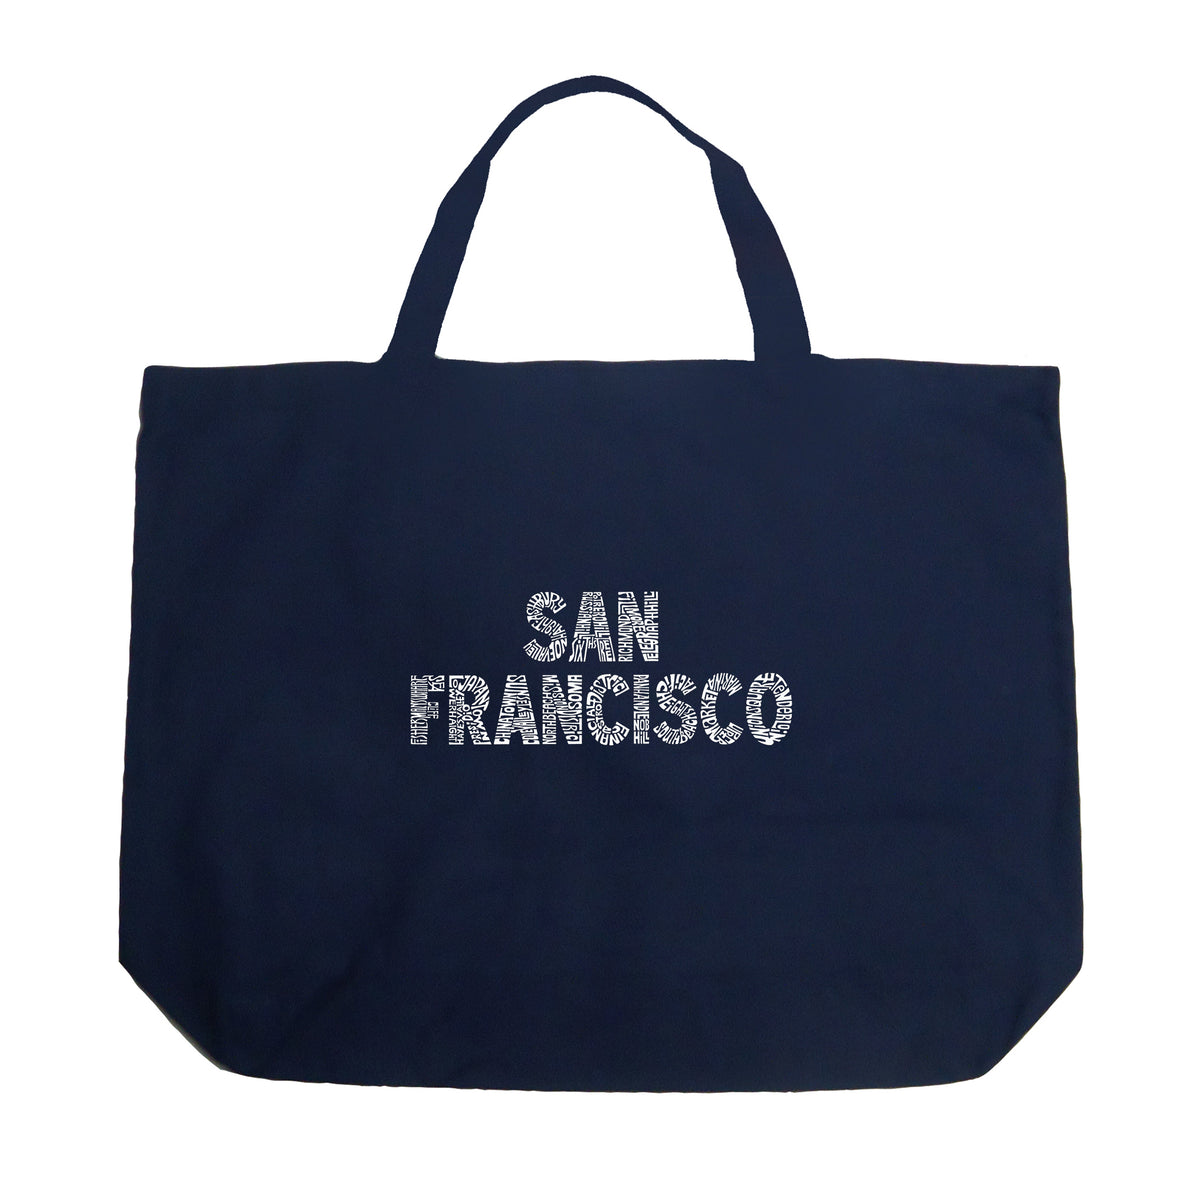 SAN FRANCISCO NEIGHBORHOODS - Large Word Art Tote Bag – LA Pop Art